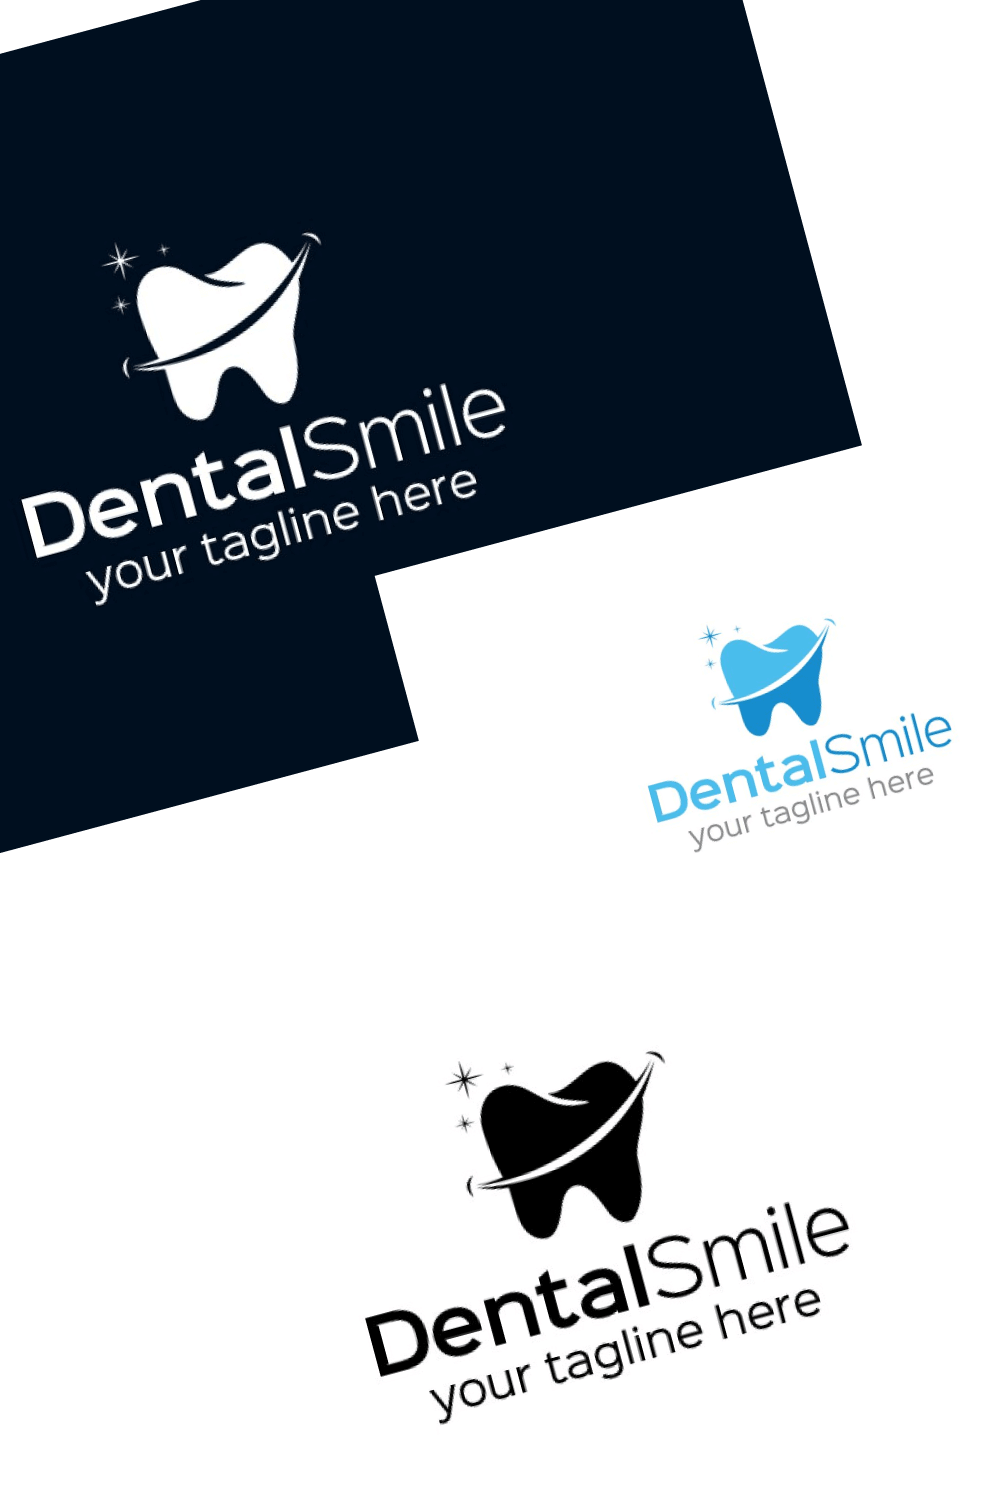 Diagonal Picture of Dental Smile.